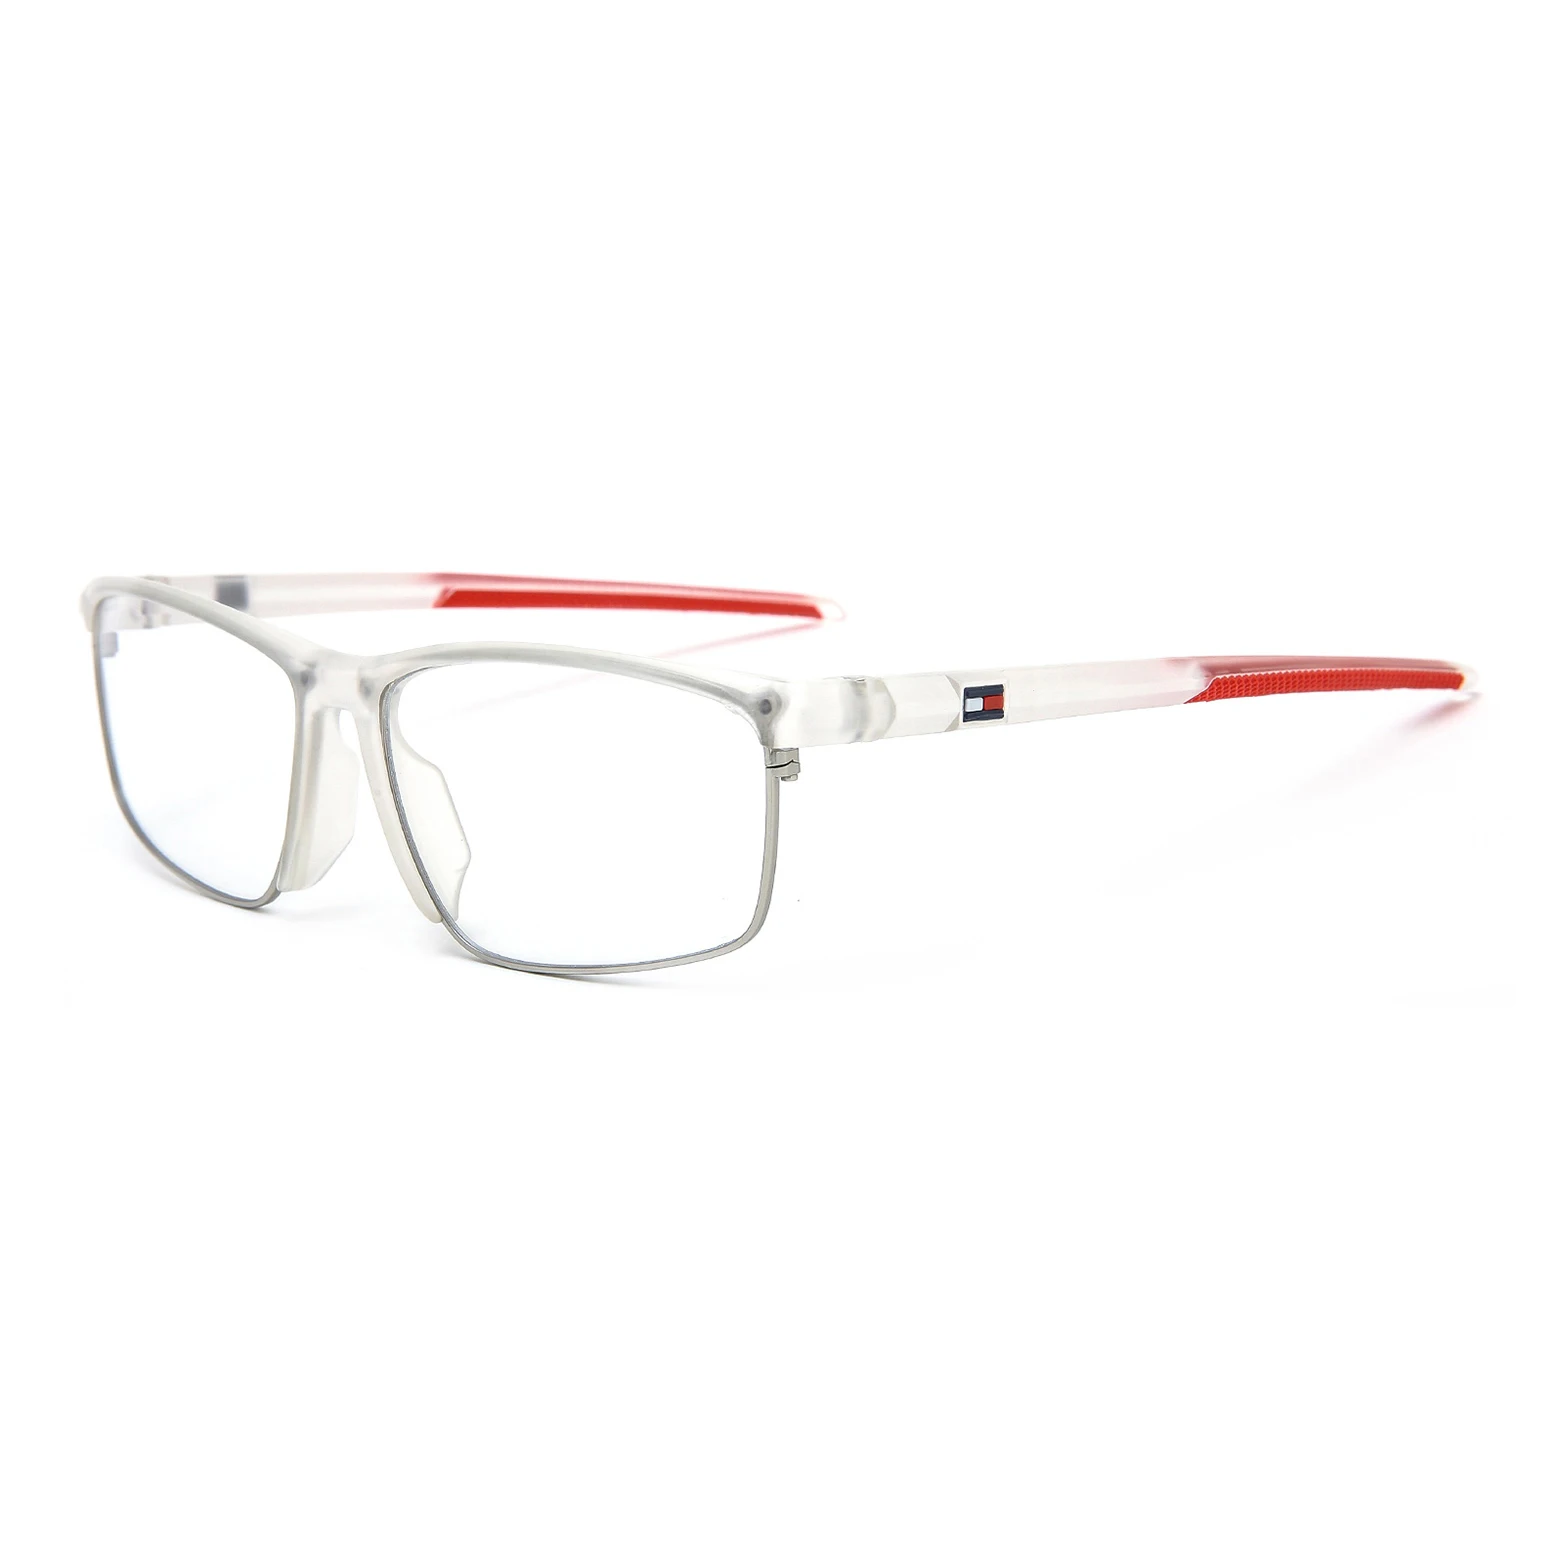 

New TR eyeglasses eyewear Other TR90 Safety Mens glasses Sport Eyewear Good Quality Eyewear Soft Frames, Oem/odm